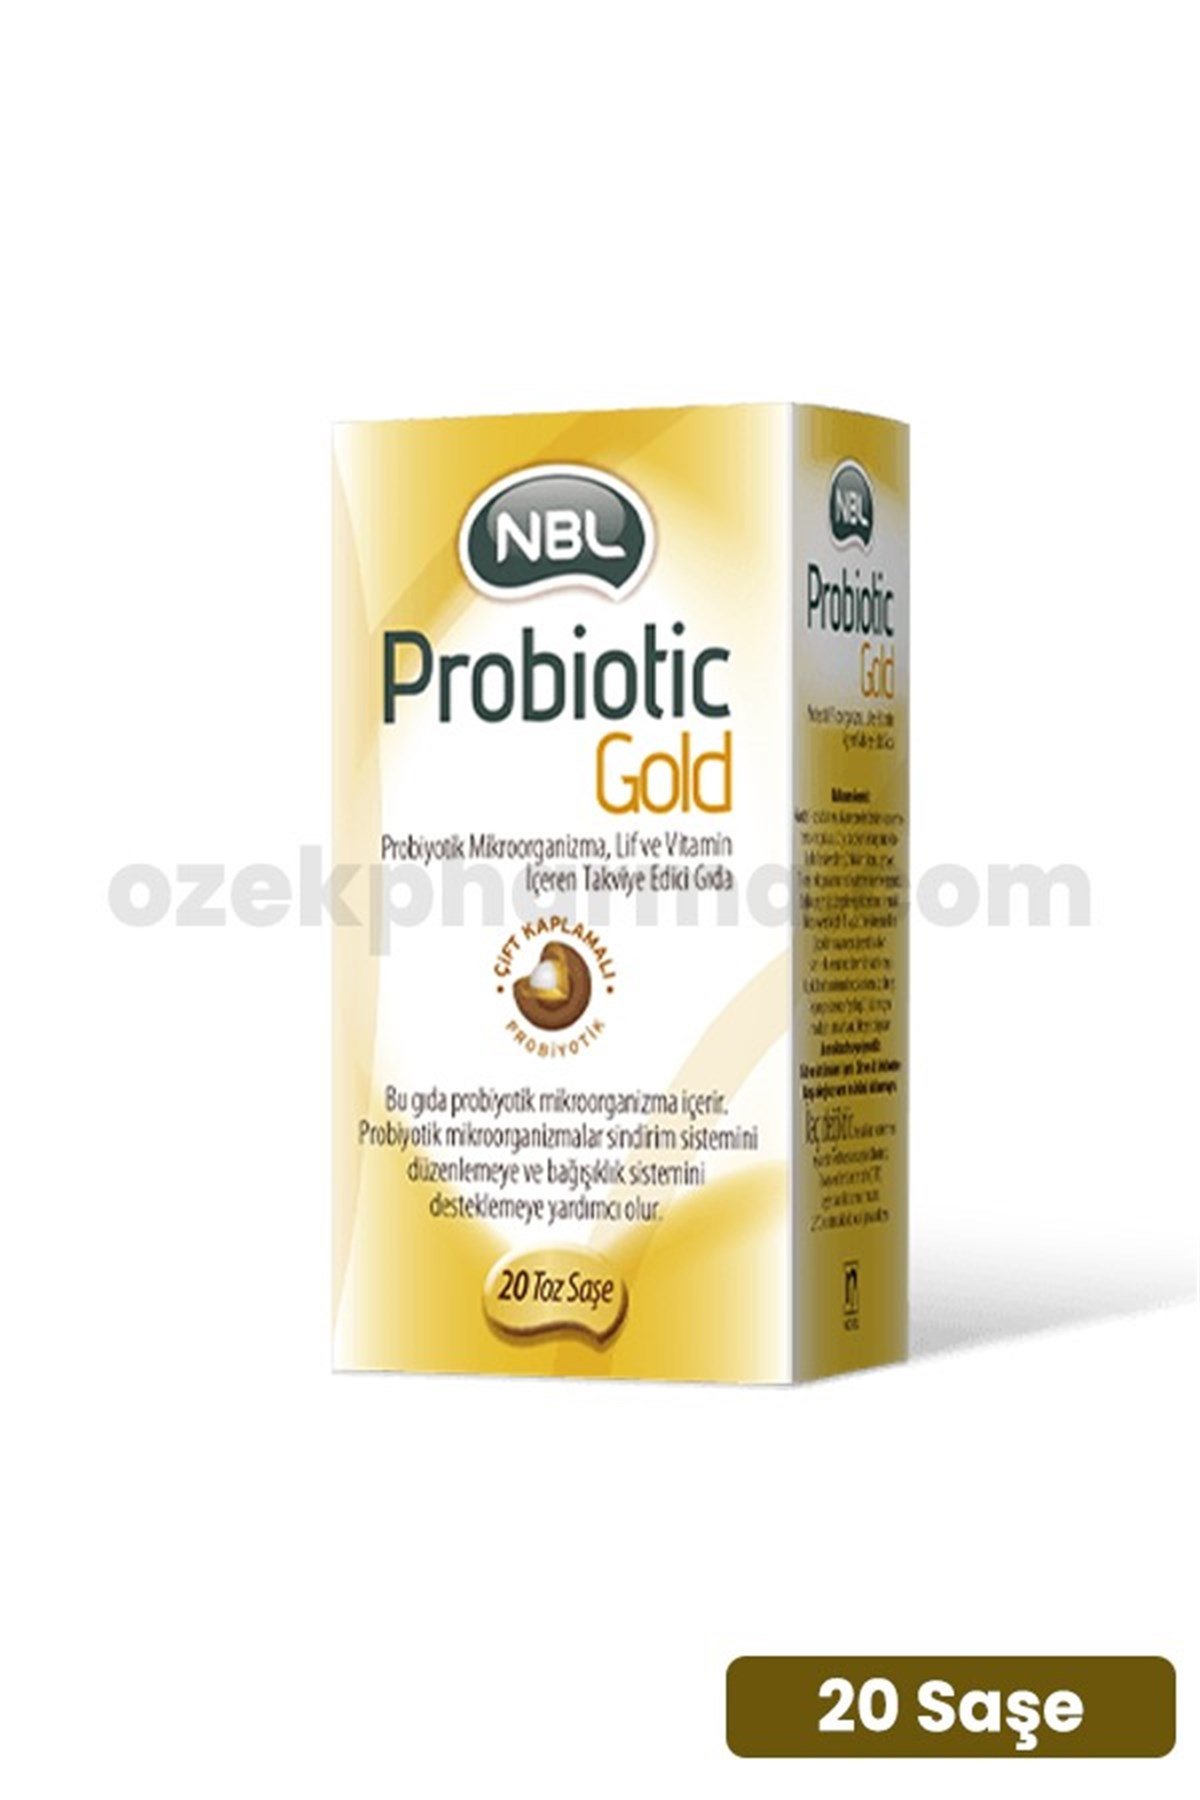 NBL Probiotic Gold 20 Stick Saşe | ozekpharma.com